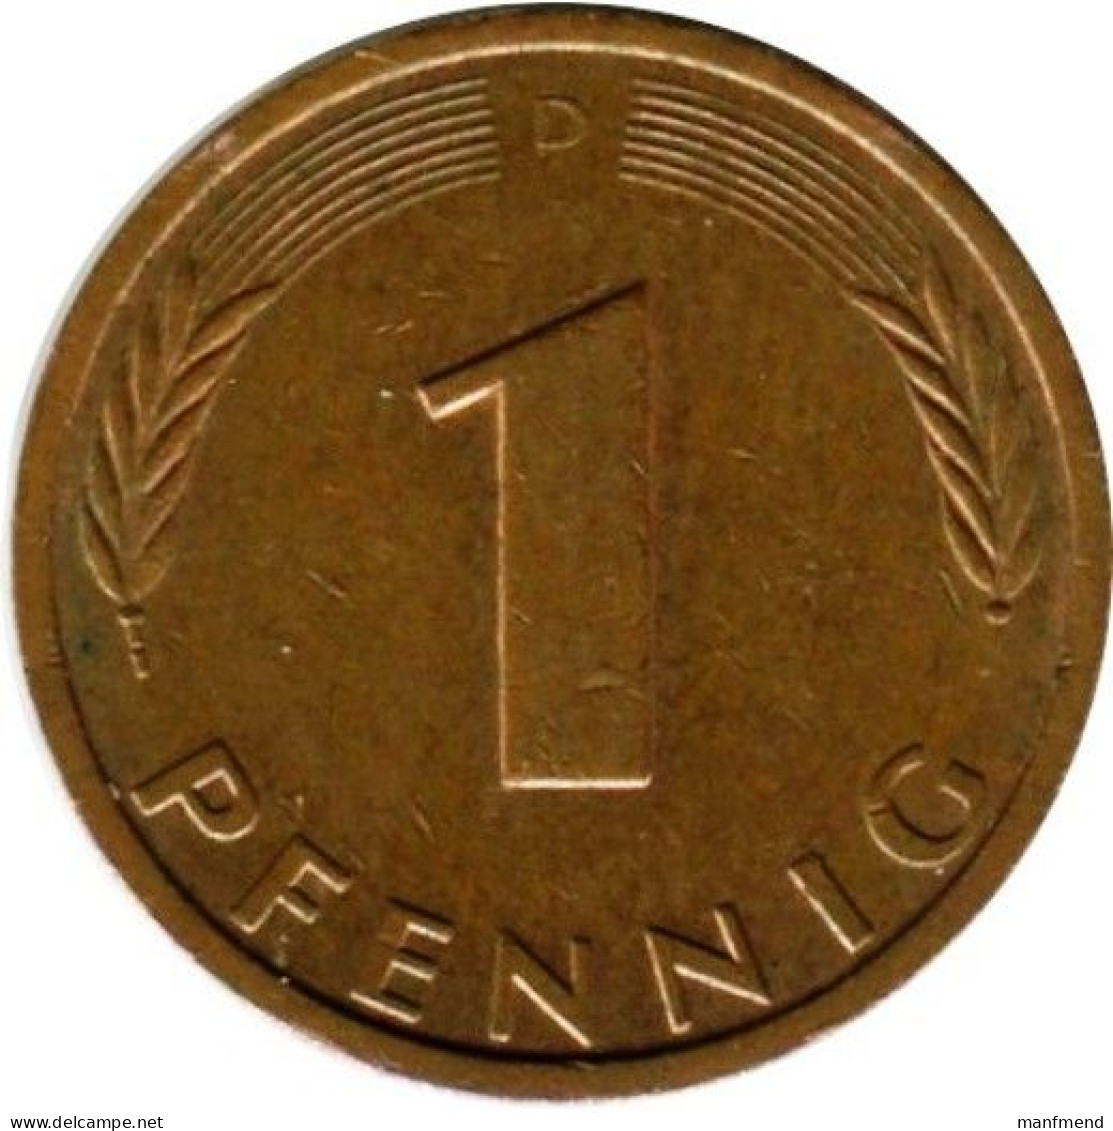 Germany - 1983 - KM 105 - 1 Pfennig - Mintmark "D" / München - XF - Look Scans - 1 Pfennig